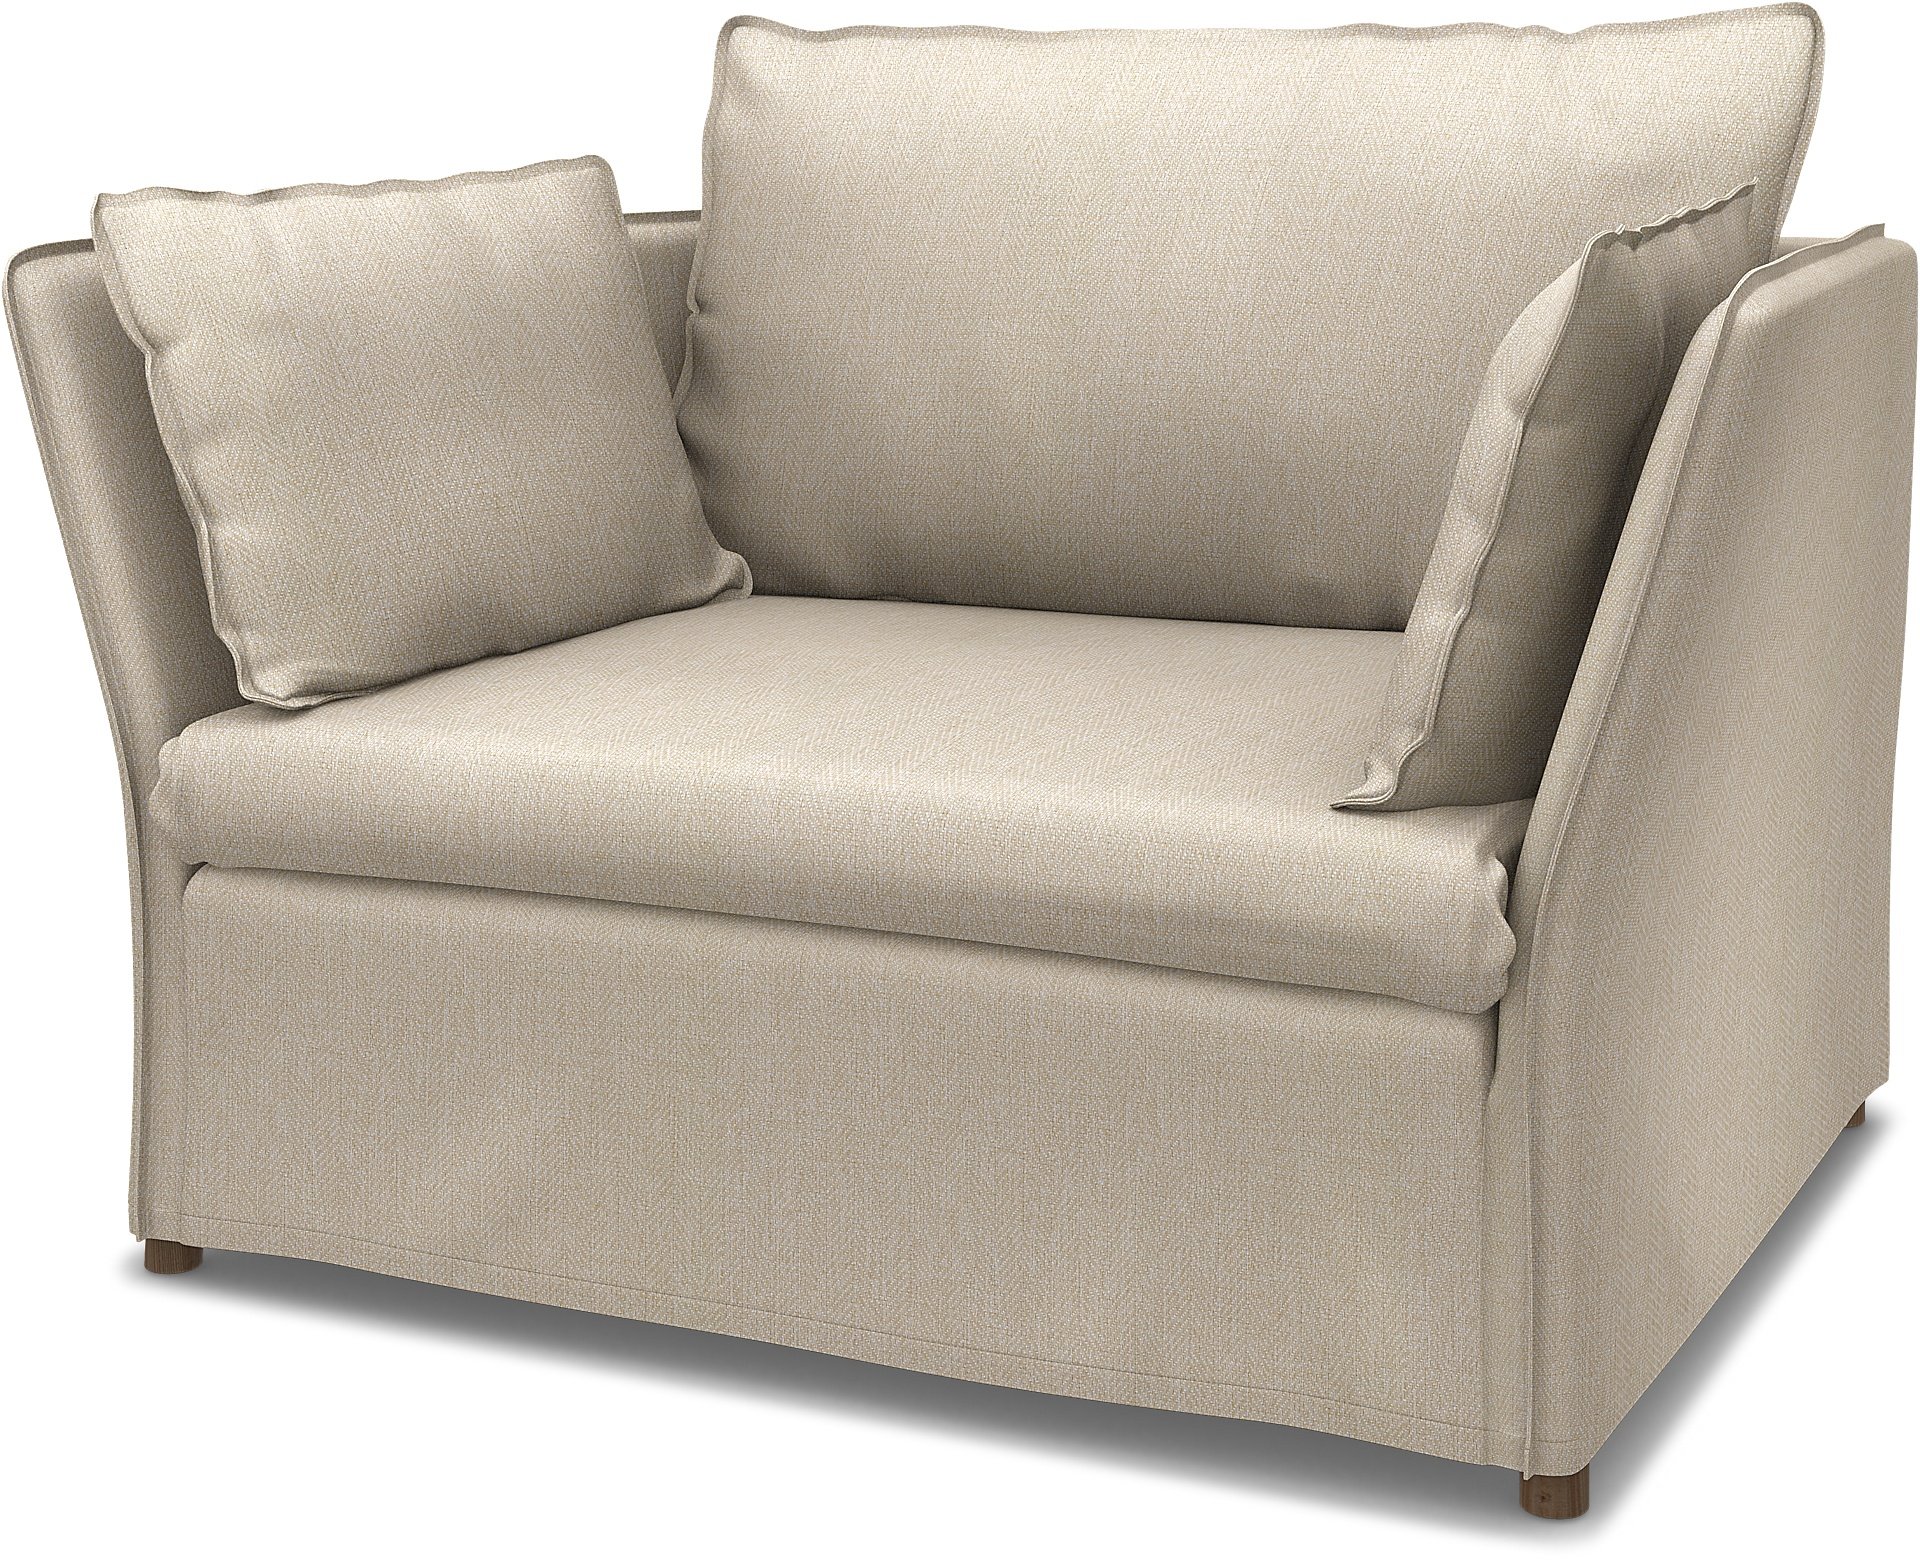 IKEA - Backsalen 1,5 seater sofa, Natural, Boucle & Texture - Bemz